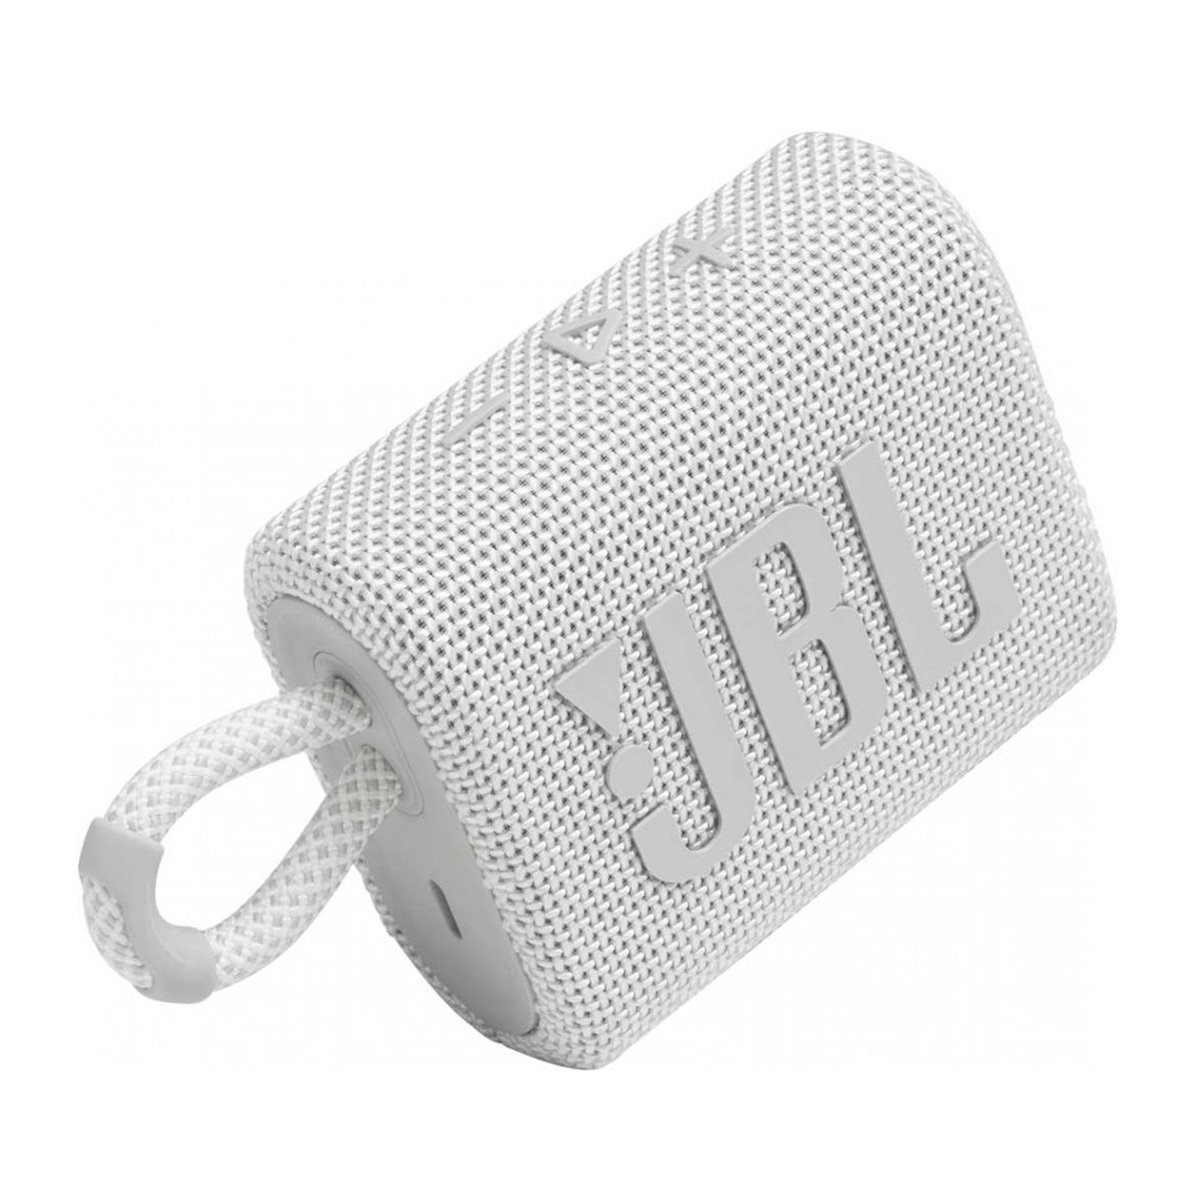 JBL Portable Bluetooth Speakers JBL GO 3 White